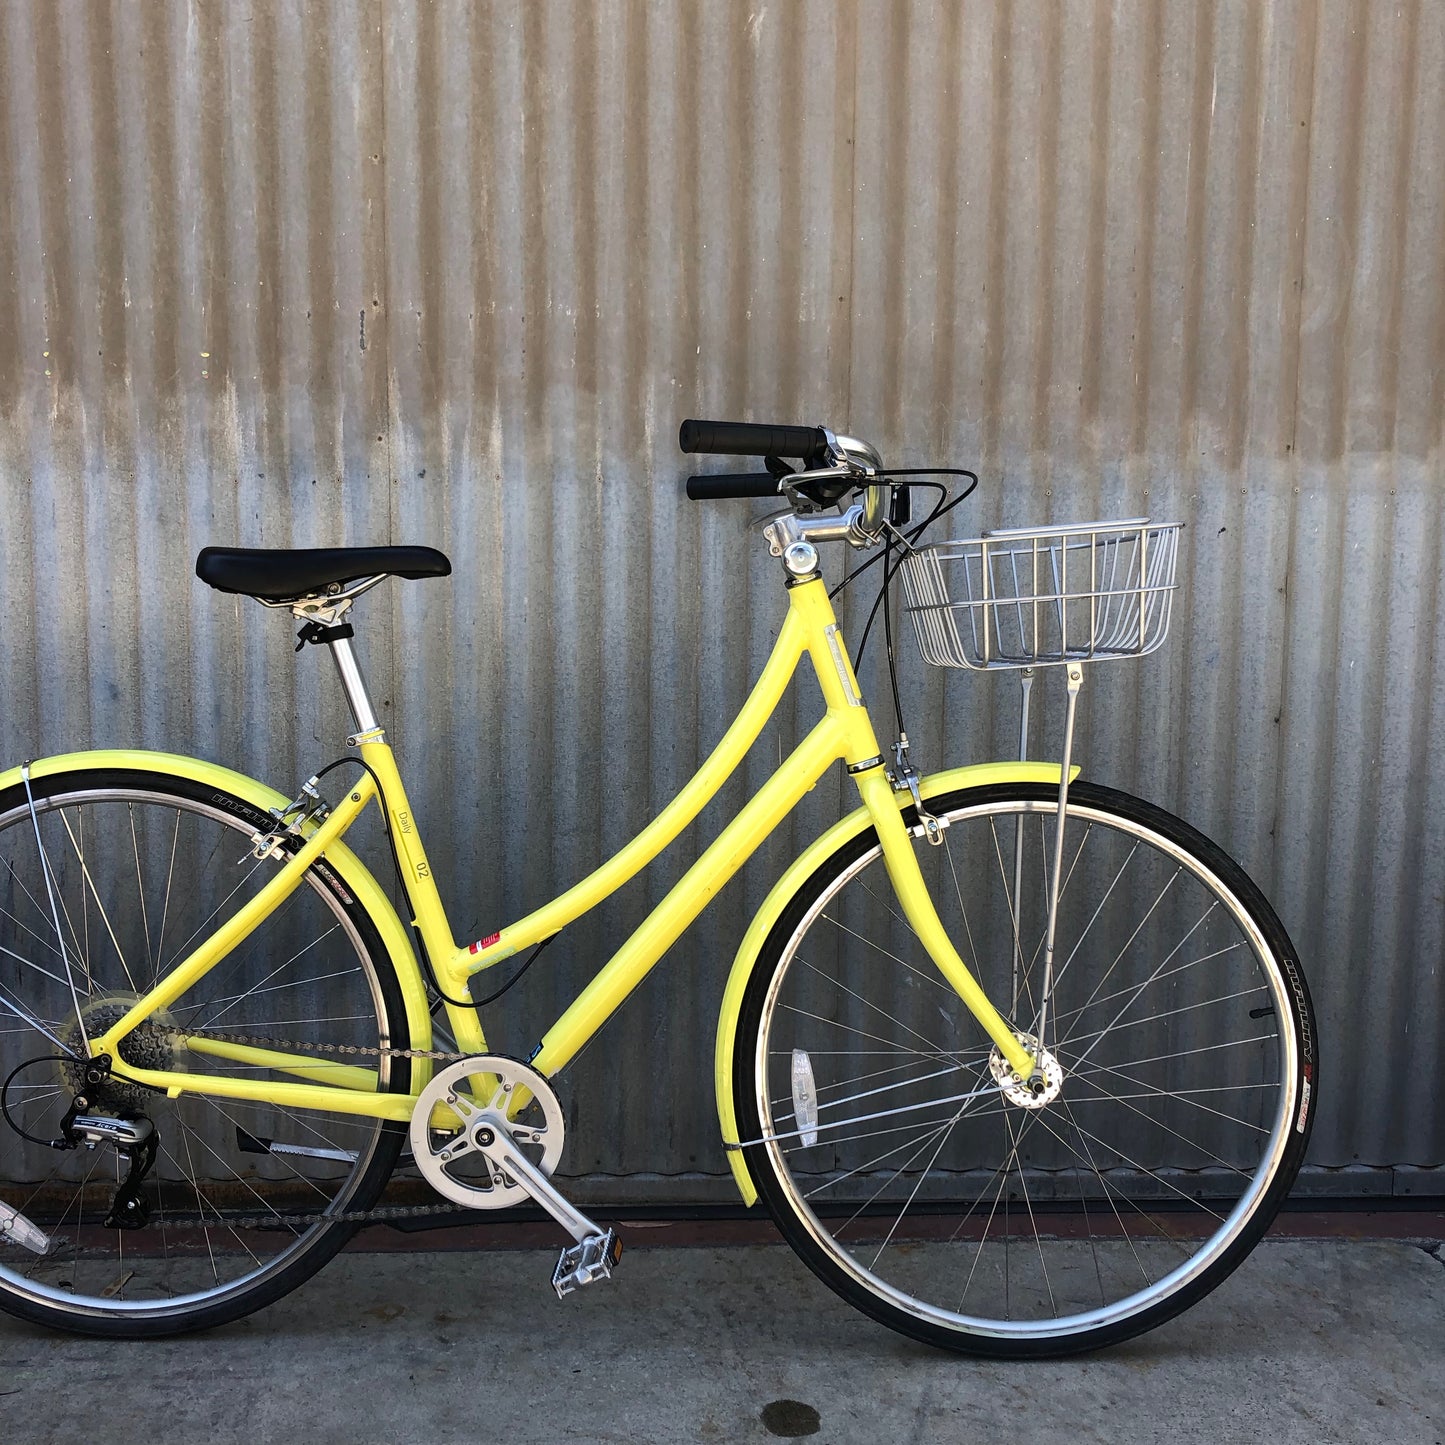 Gently Used Globe City Bike for Women - Lemon Yellow